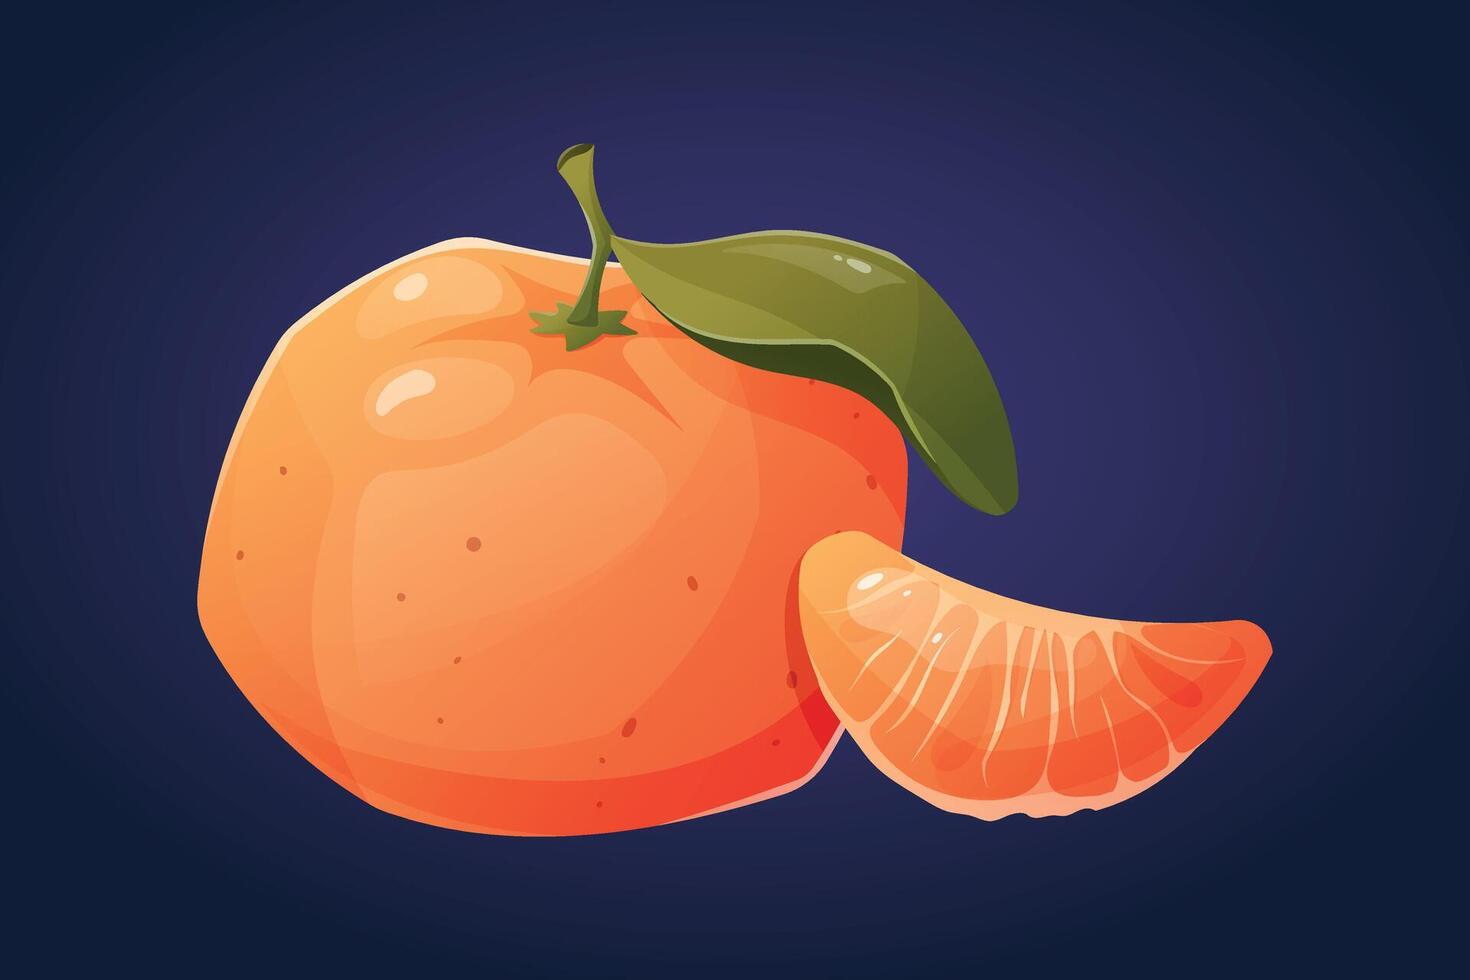 Ripe juicy whole tangerine or orange, and a slice. isolated cartoon fruit citrus illustration. vector